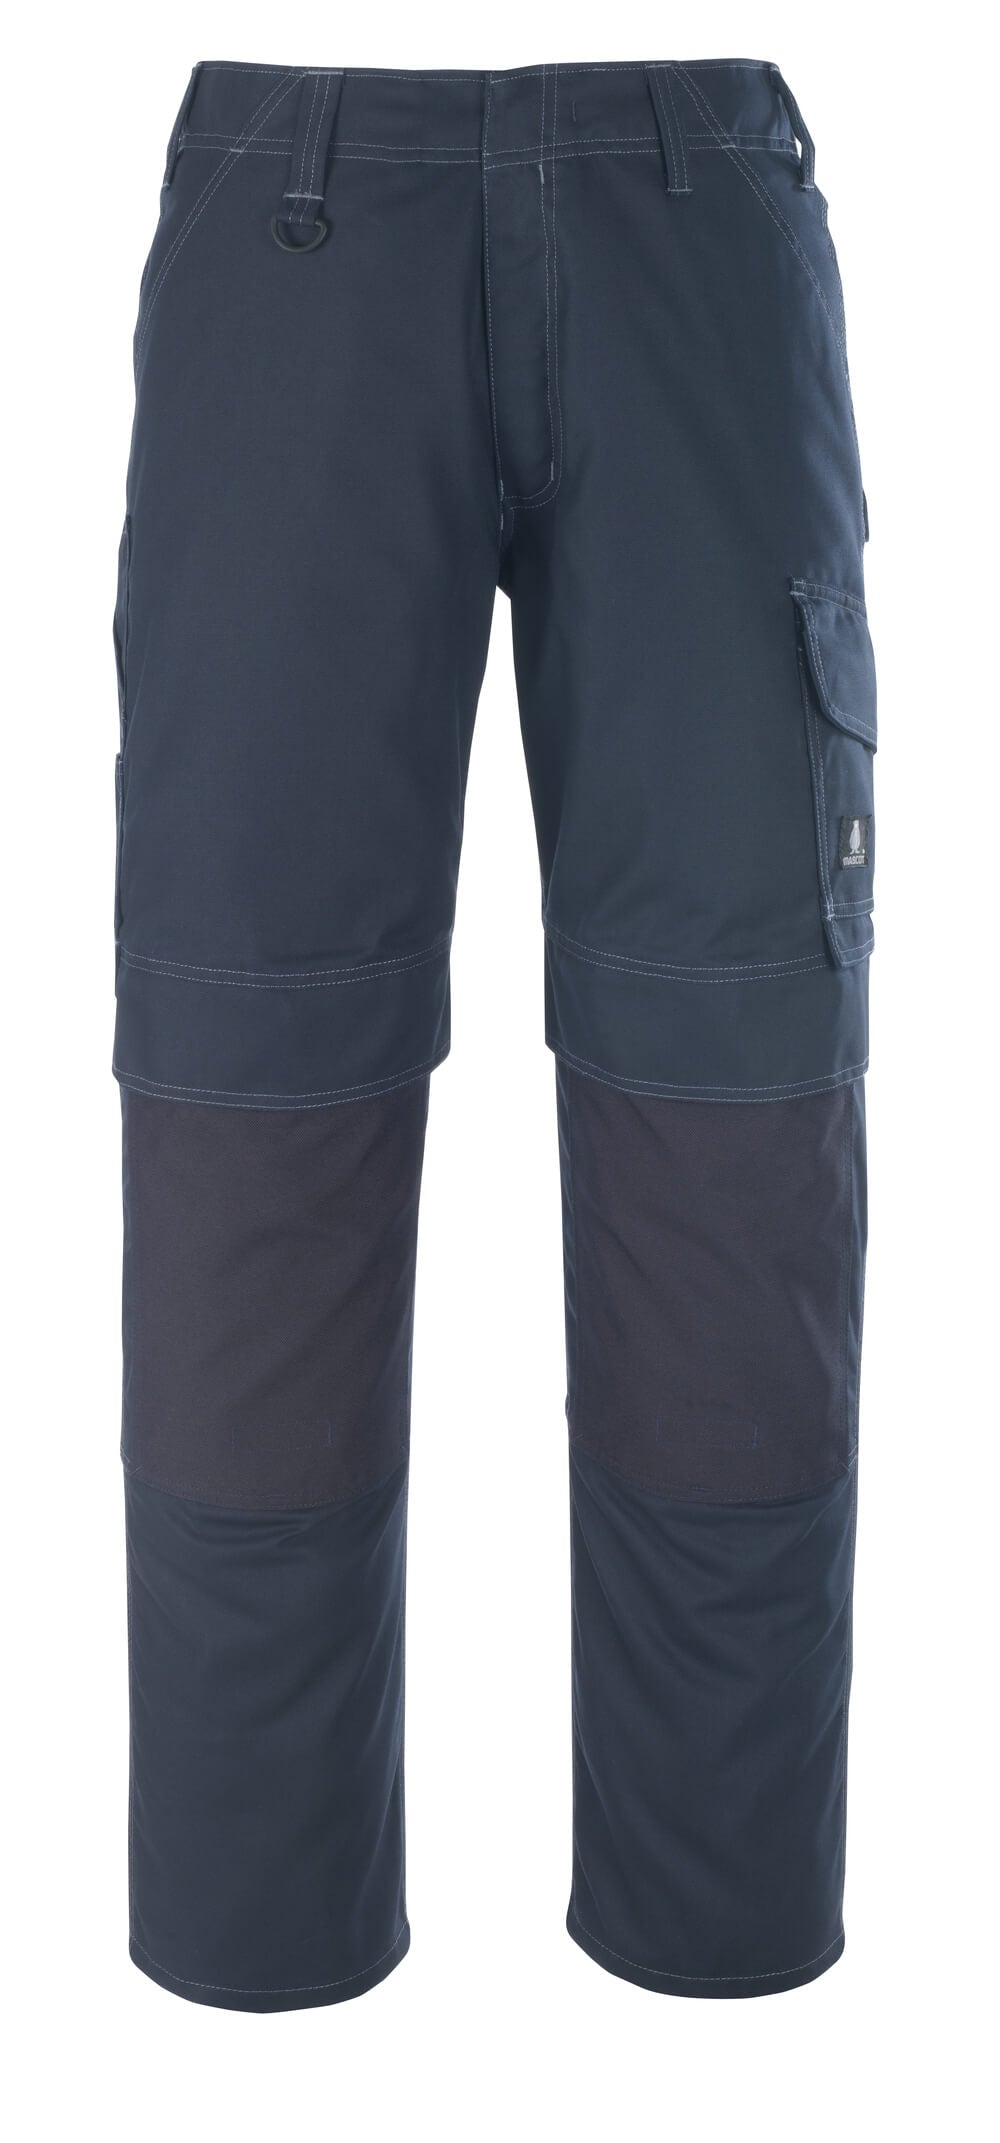 Mascot INDUSTRY Houston Pantalon avec poches genouillères 10179 marine foncé